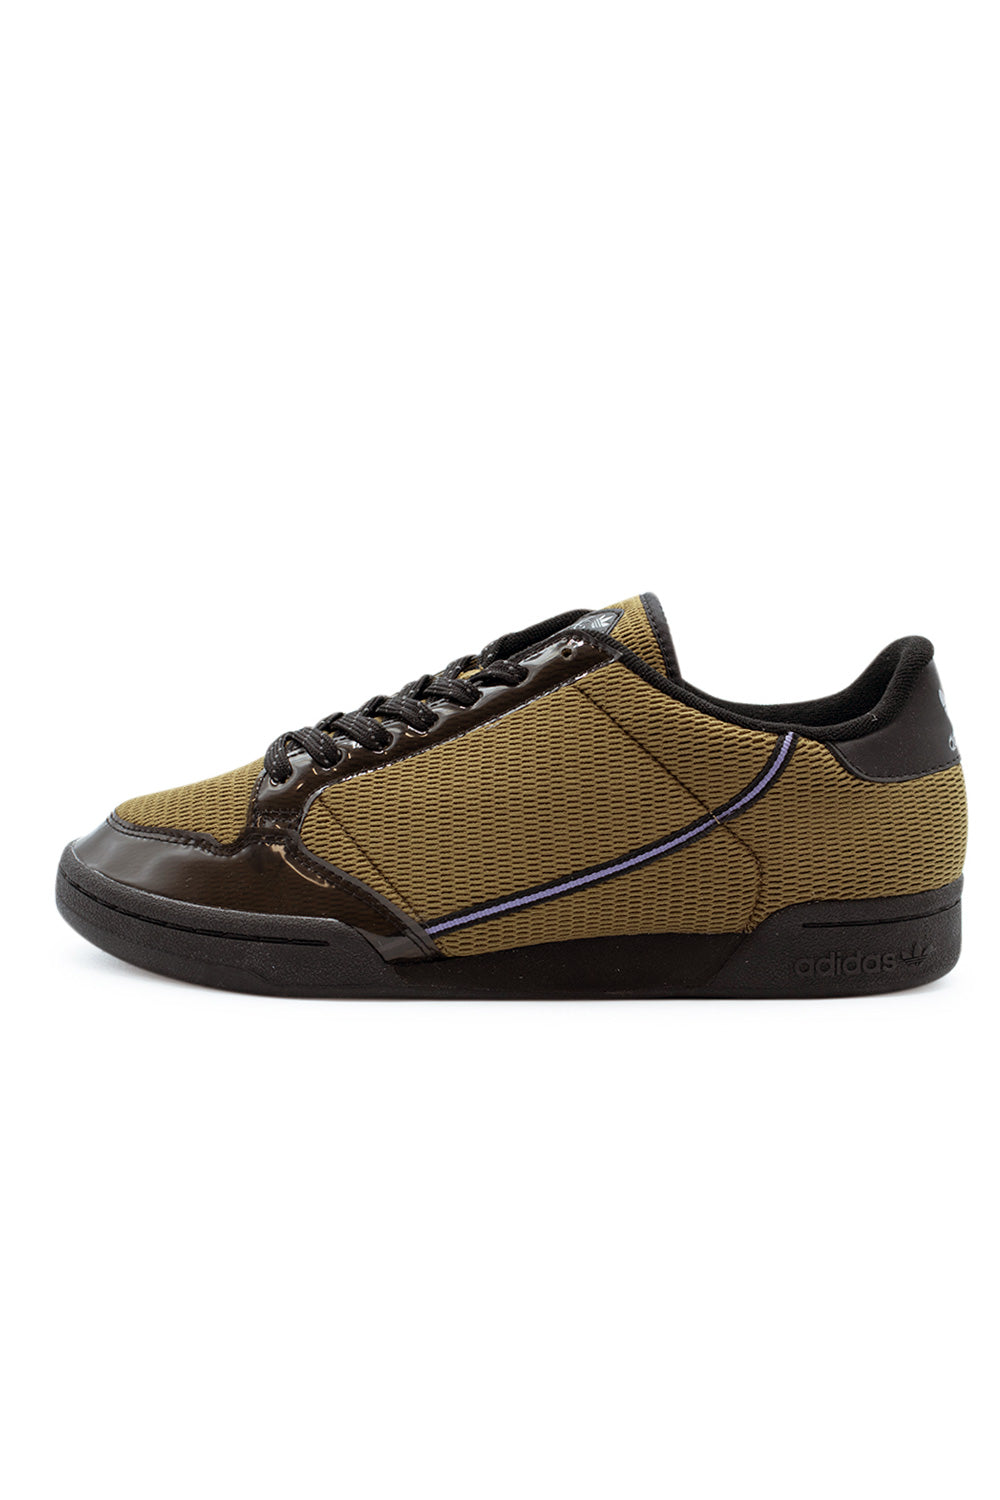 Adidas Continental Shoe (Blondey McCoy) Core Black / Core Black / Magic Lilac - BONKERS